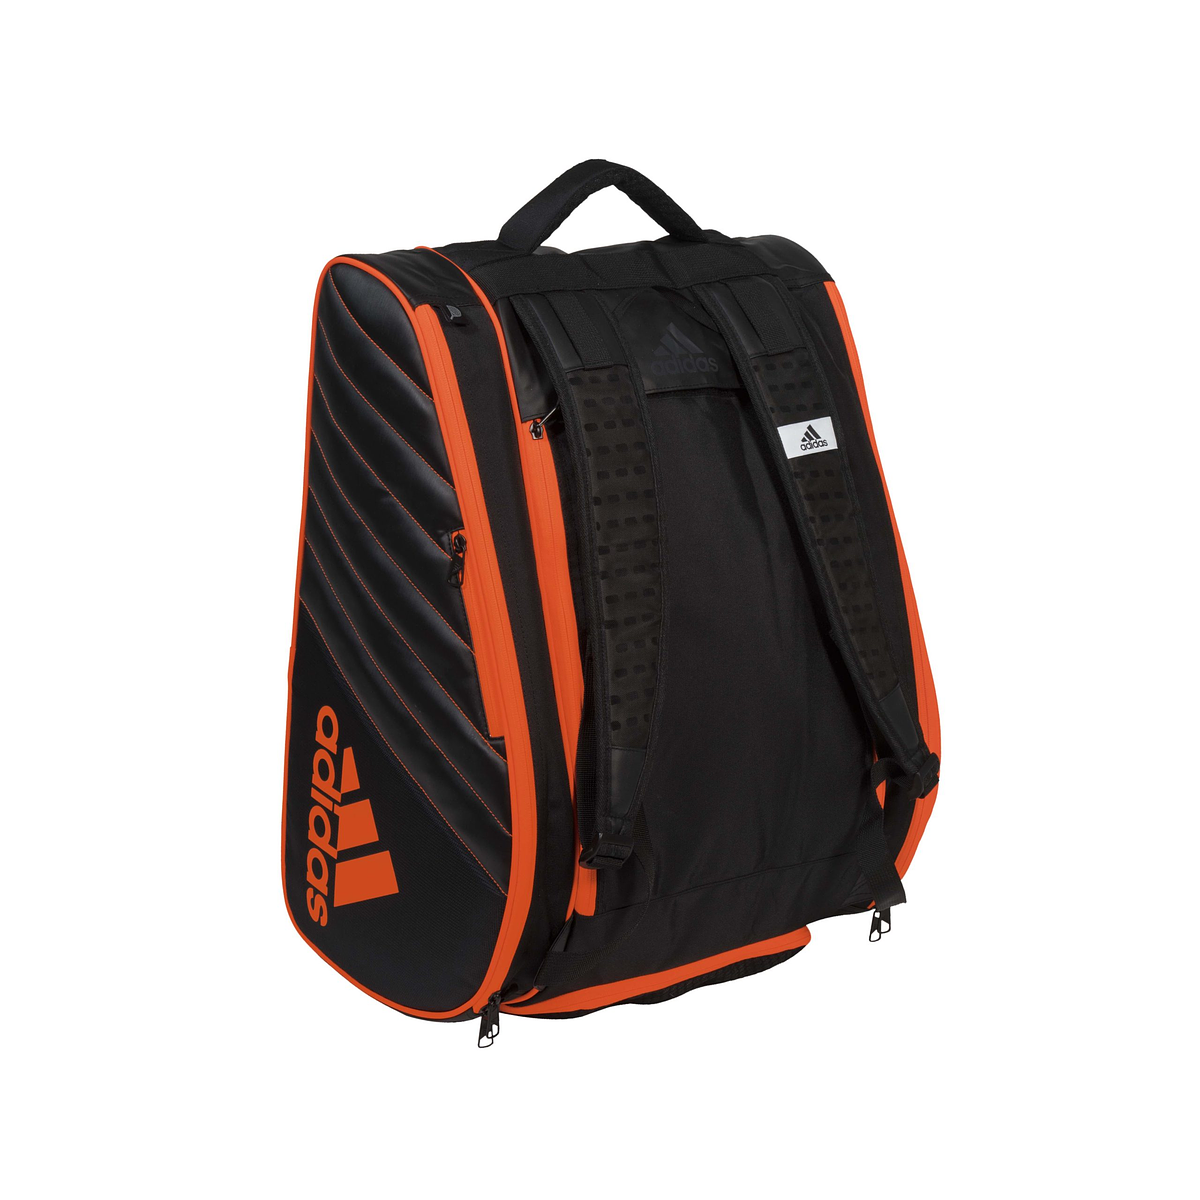 Racket Bag Protour Black Orange